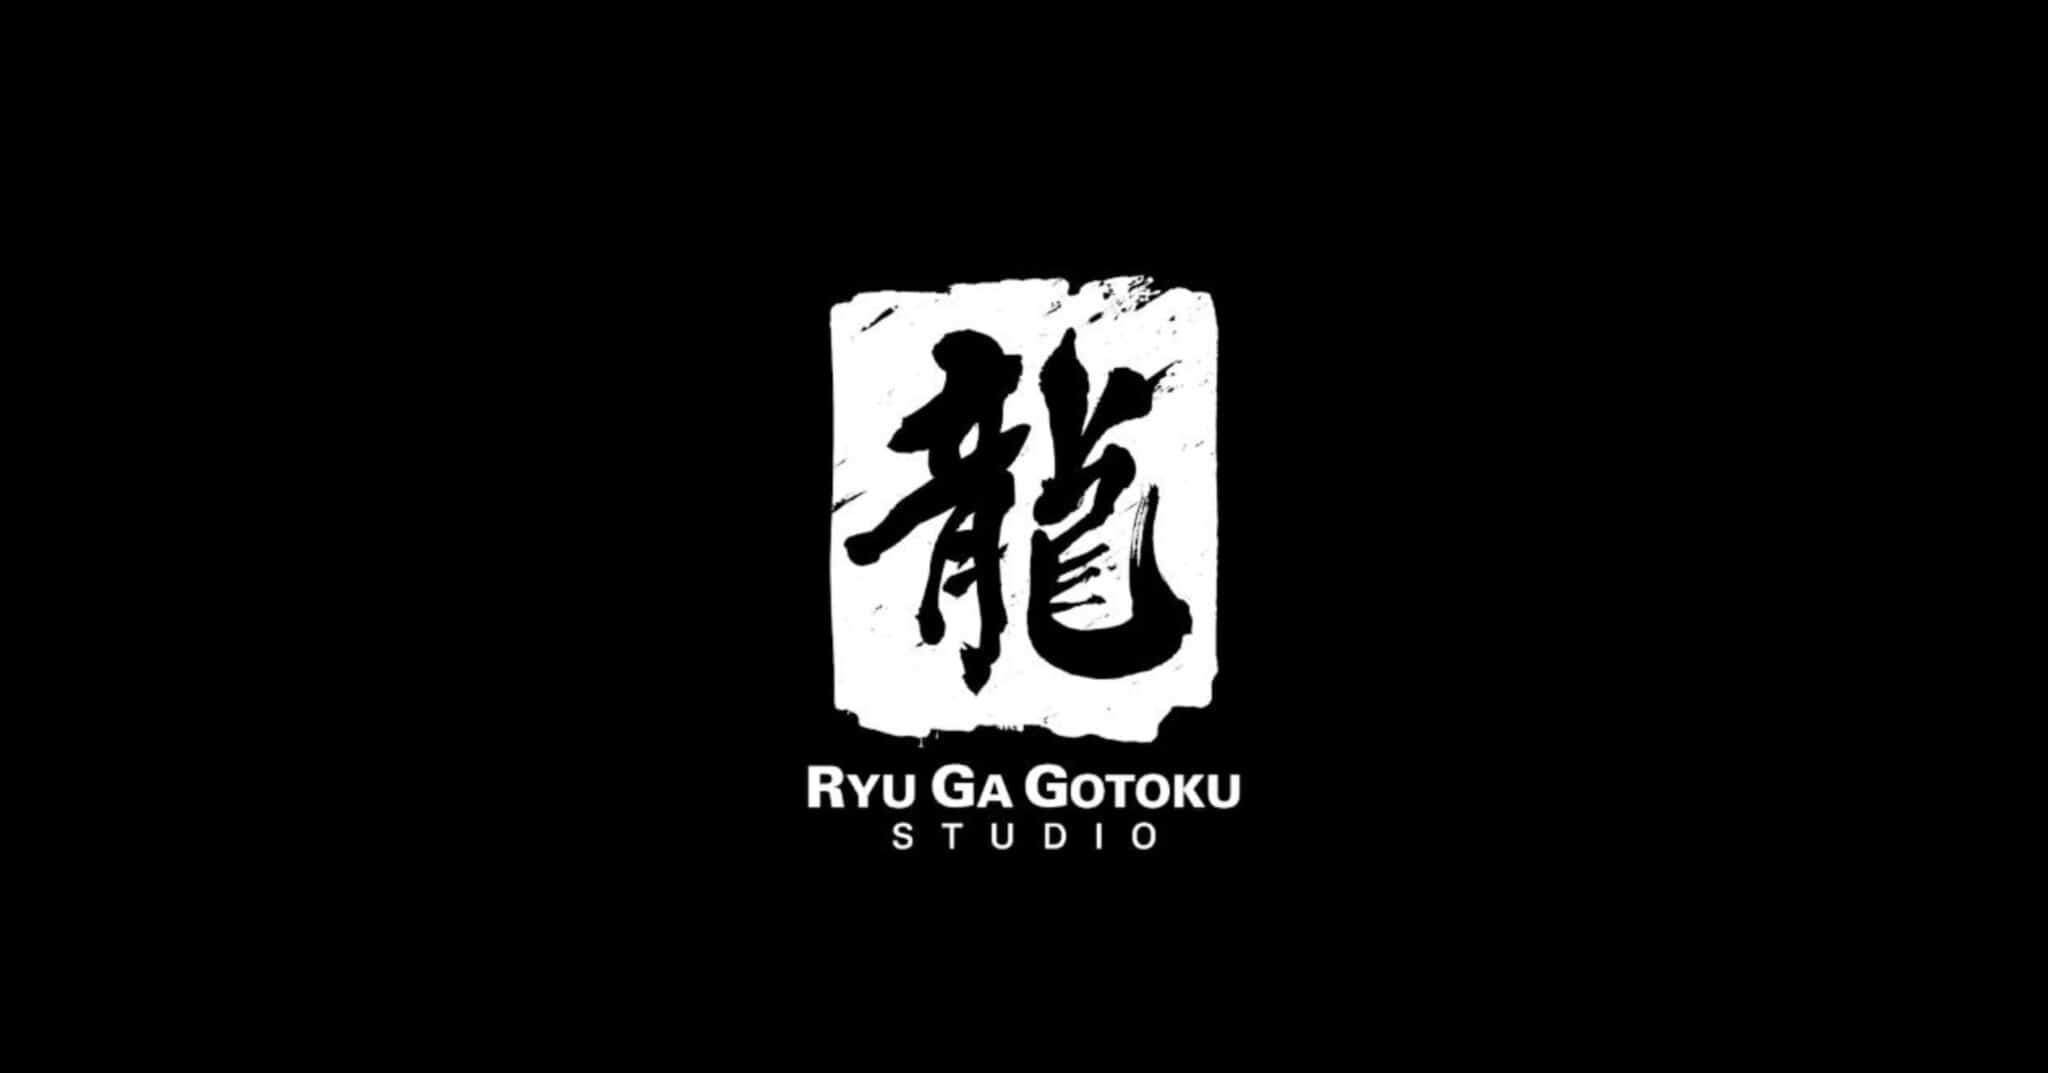 Ryu Ga Gotoku Studio trabaja en múltiples proyectos a parte de Yakuza 8